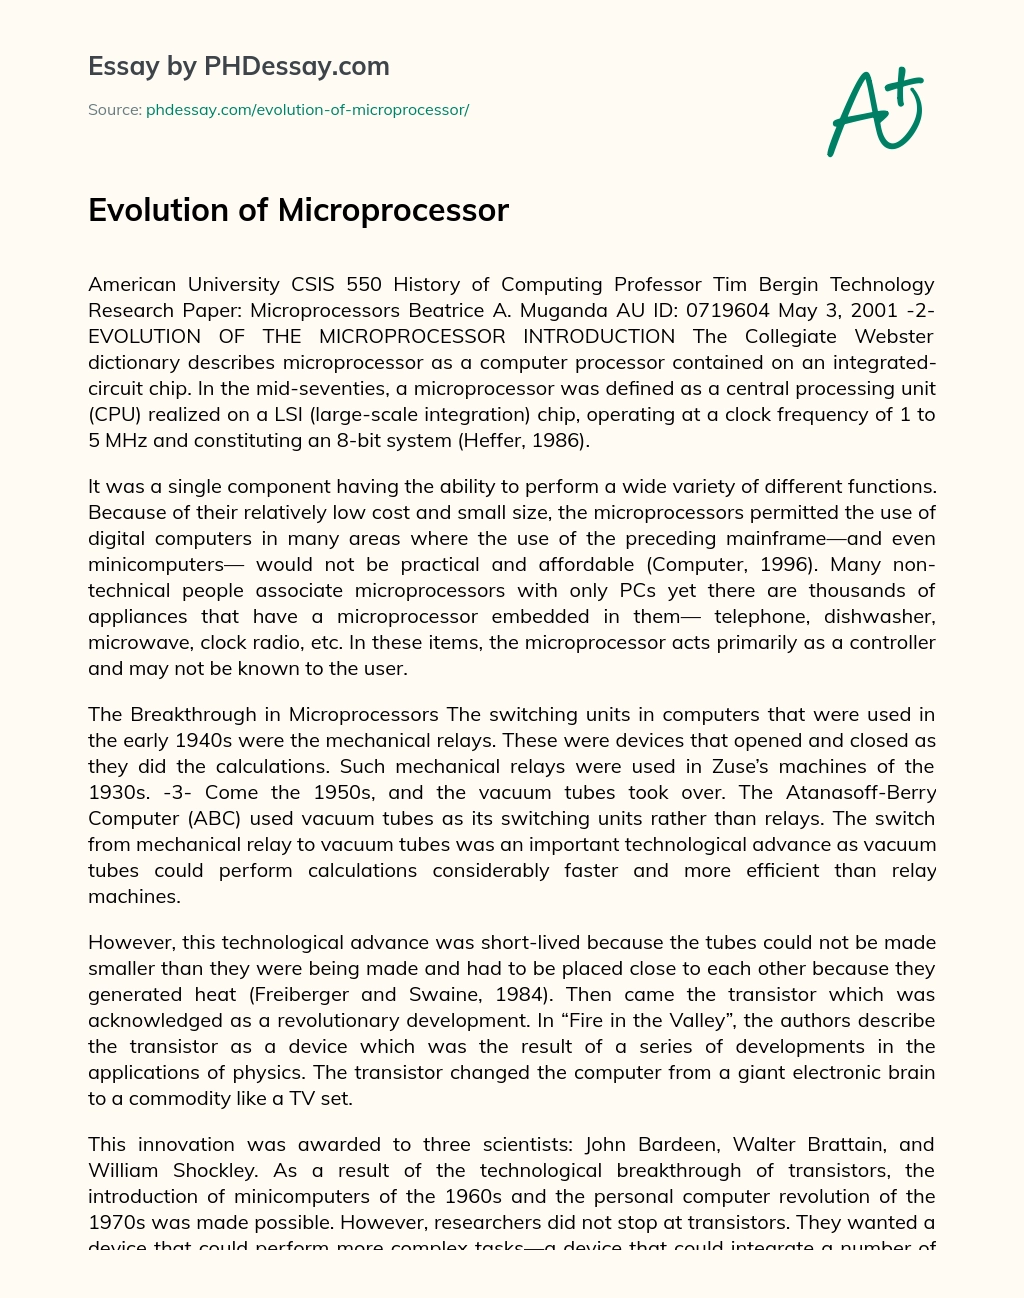 Evolution of Microprocessor essay